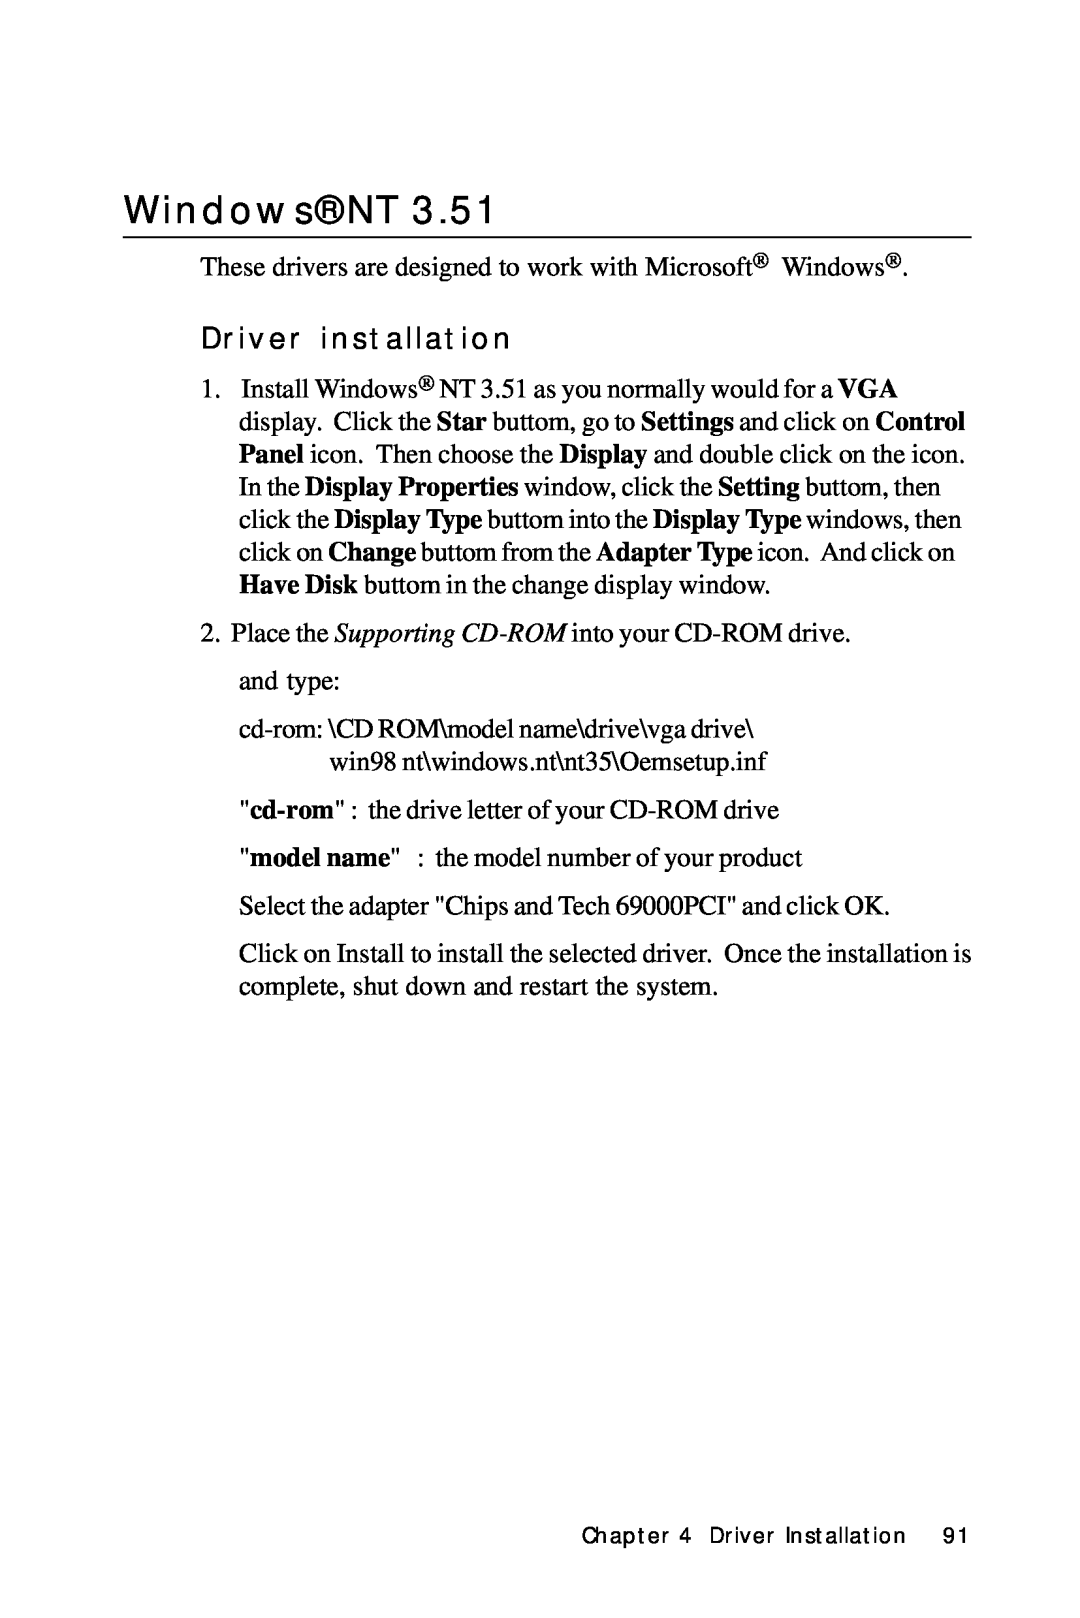 IBM All-in-One FC/Socket 370 Celeron, PCM-6890B manual Windows NT, Driver installation 